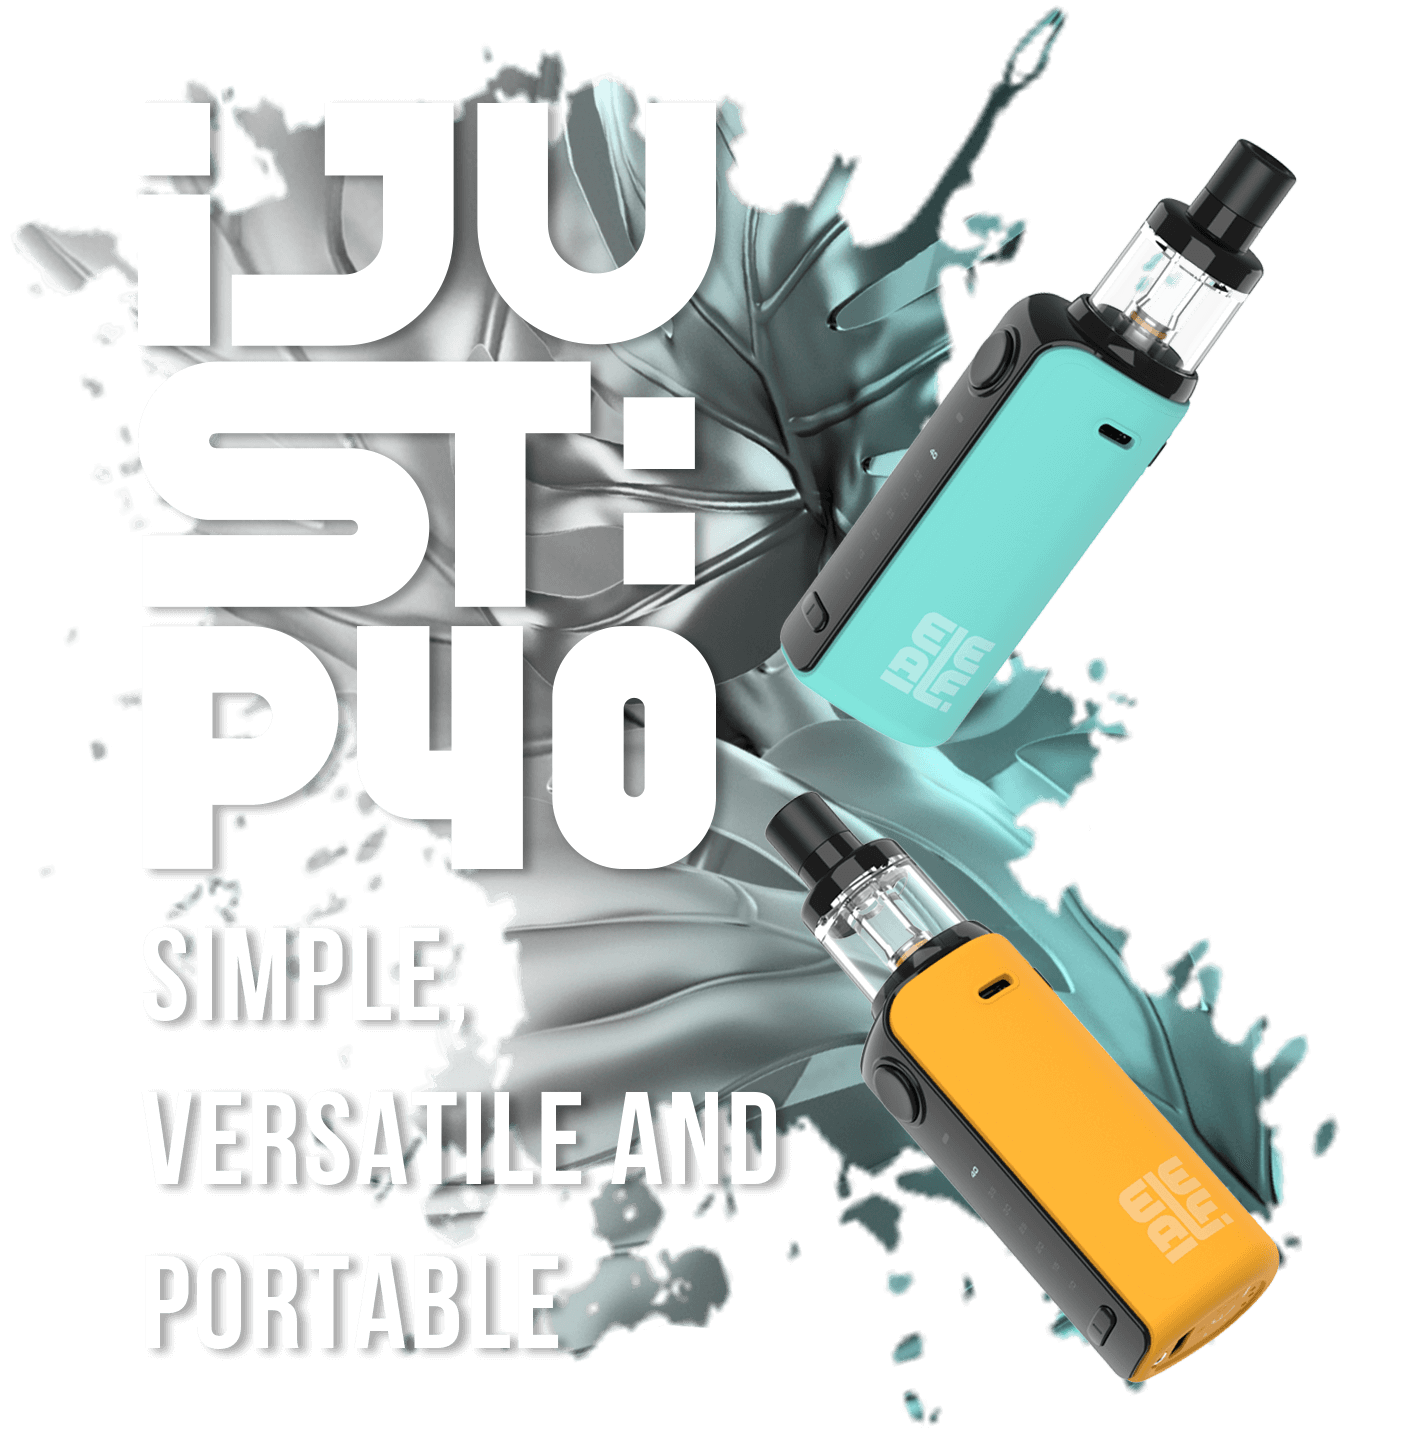 Eleaf iJust P40 vape kit features compact design and versatile use